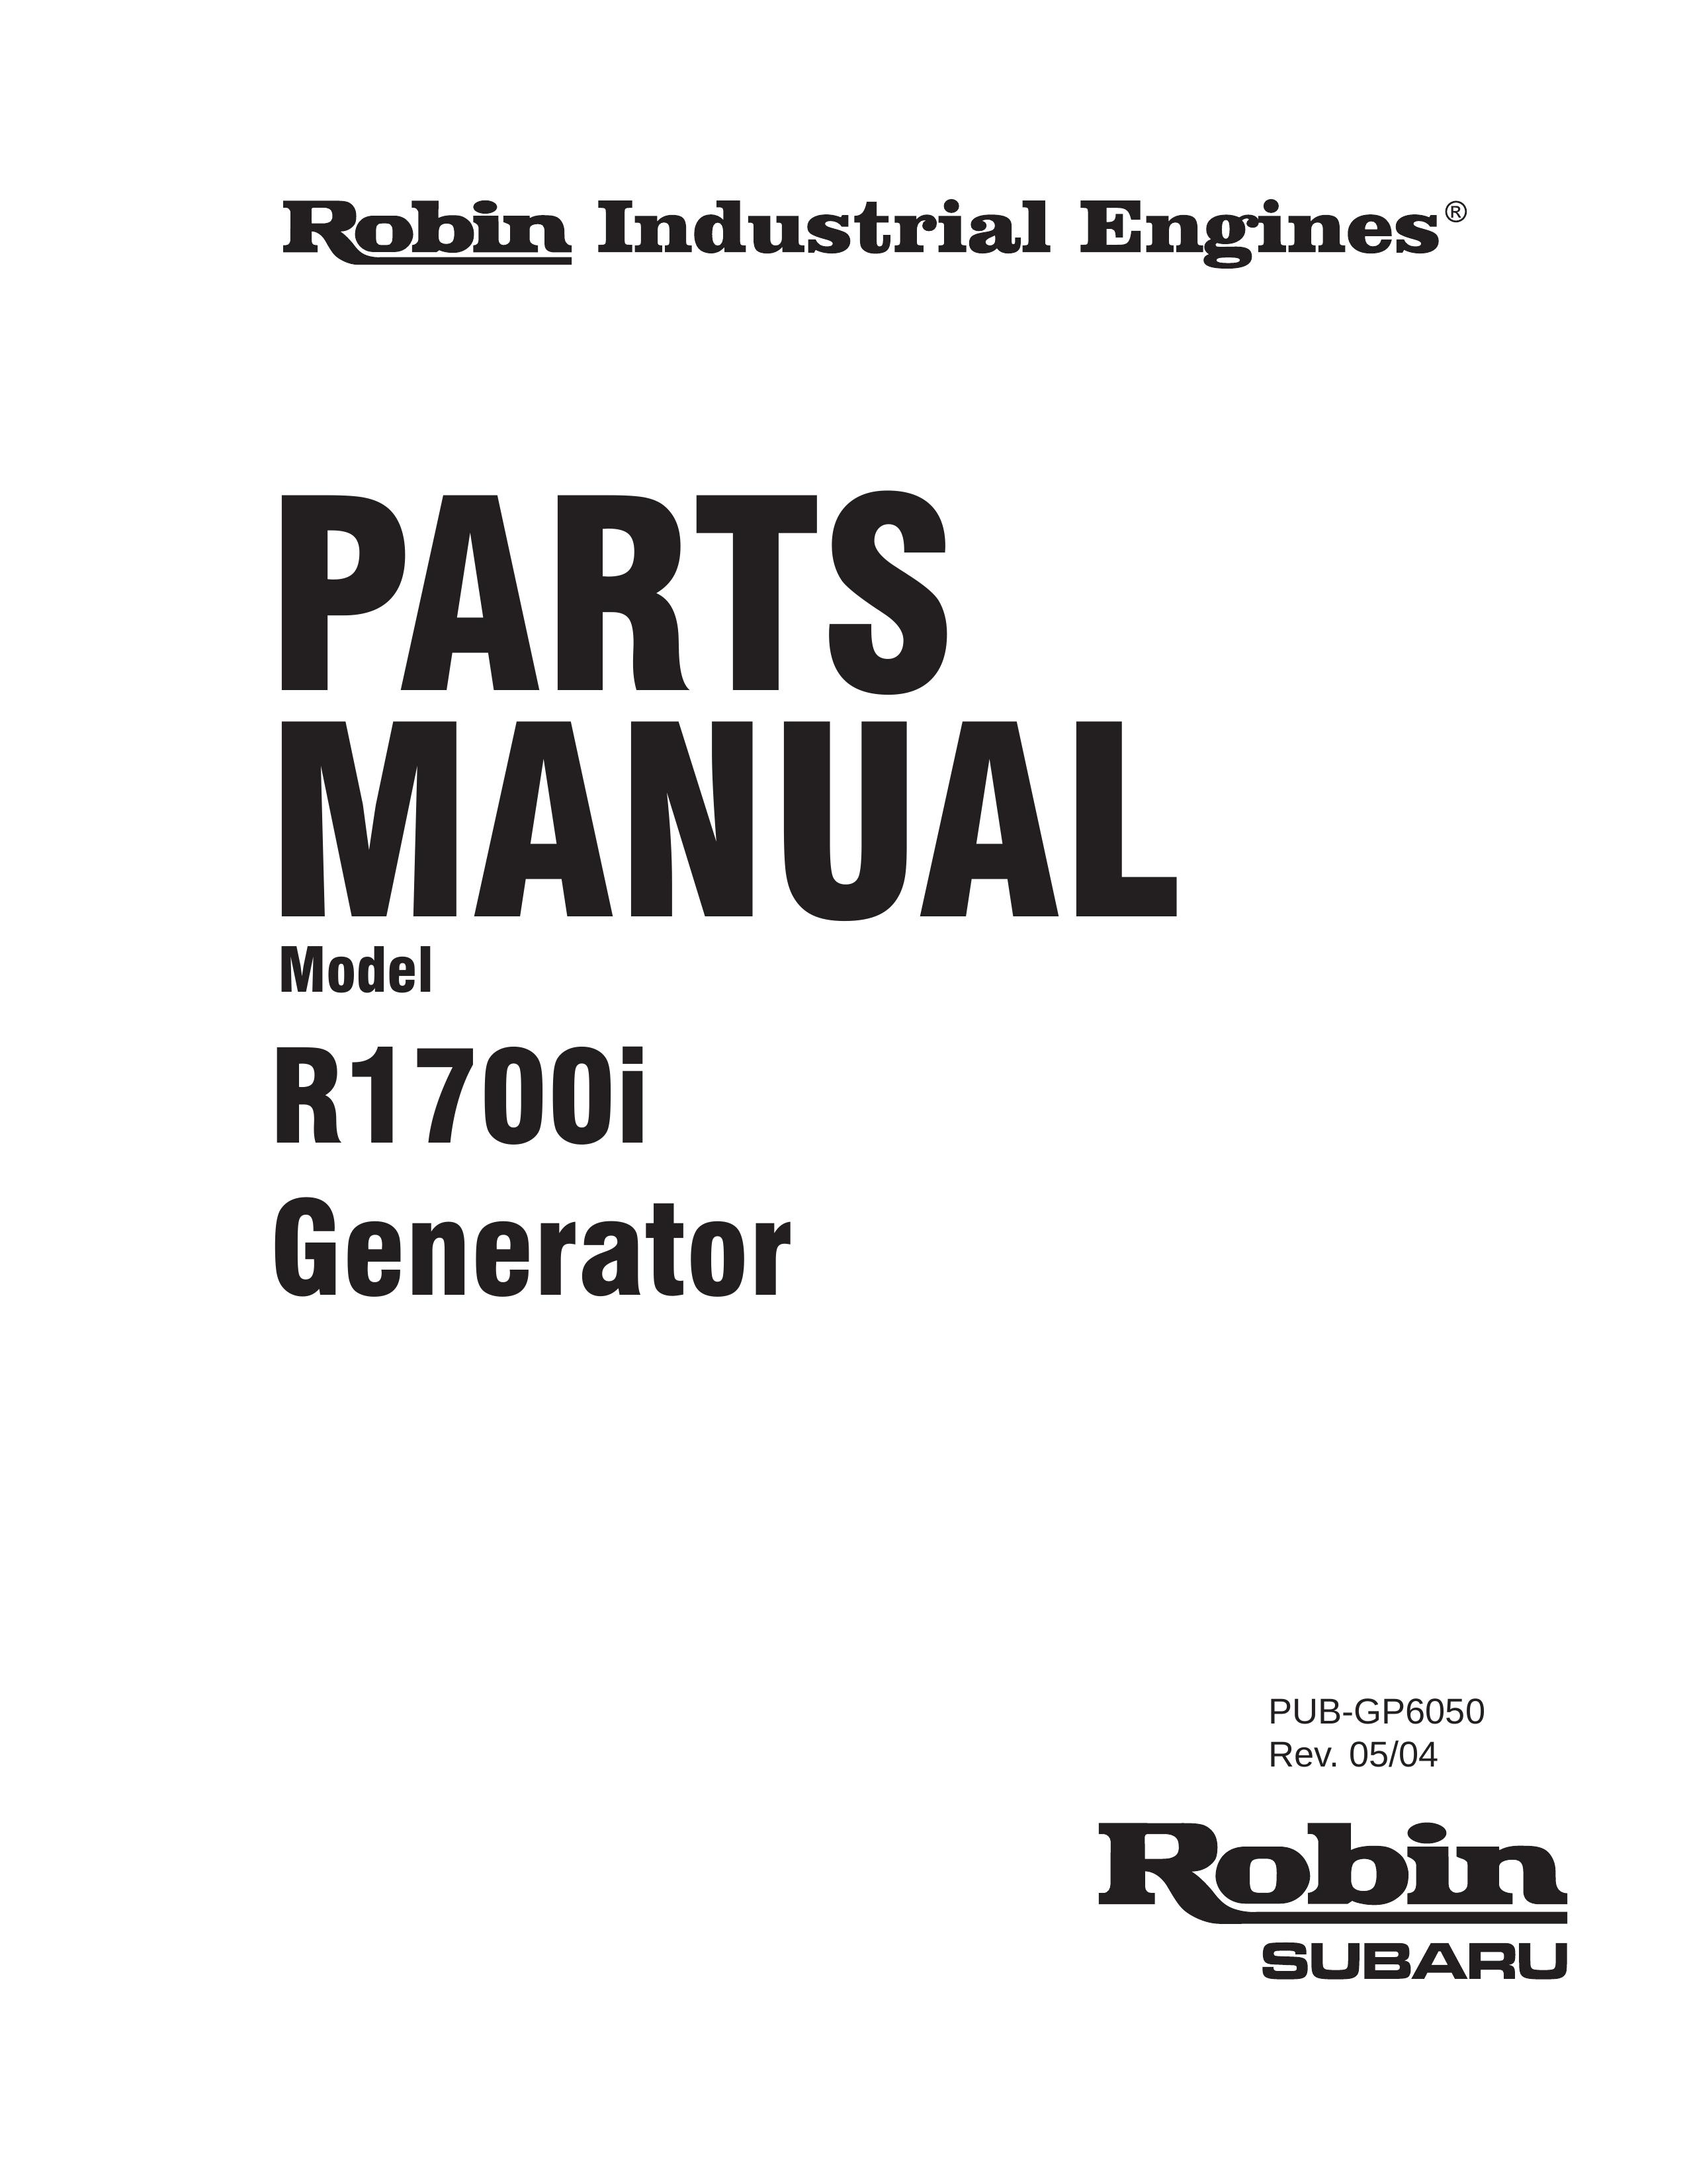 Subaru Robin Power Products PUB-GP6050 Portable Generator User Manual